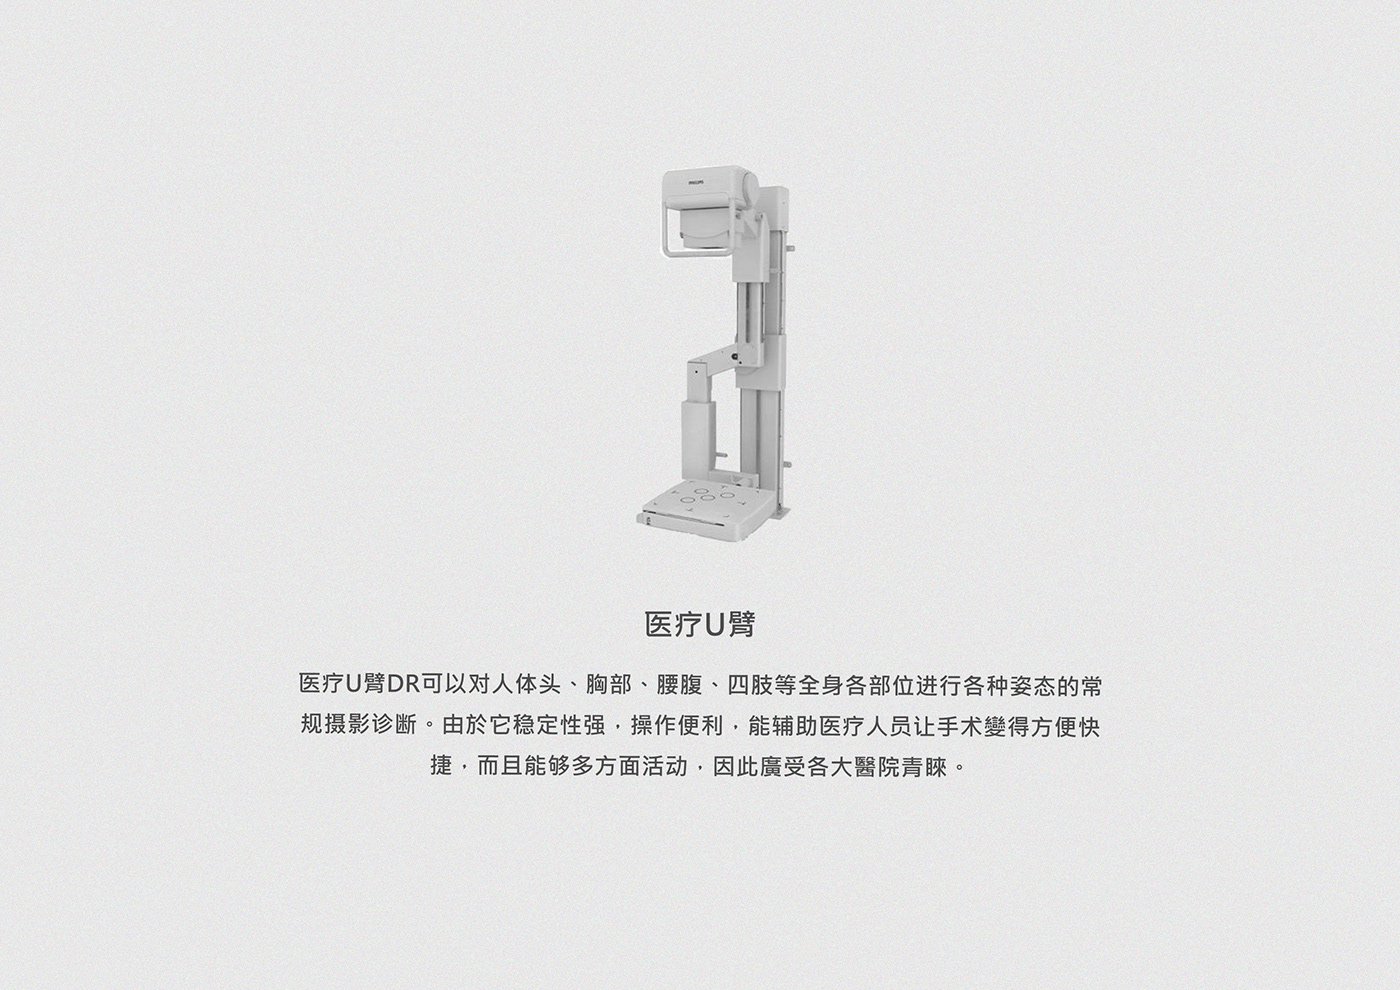 xray meddical uarm medical machine product machine design research